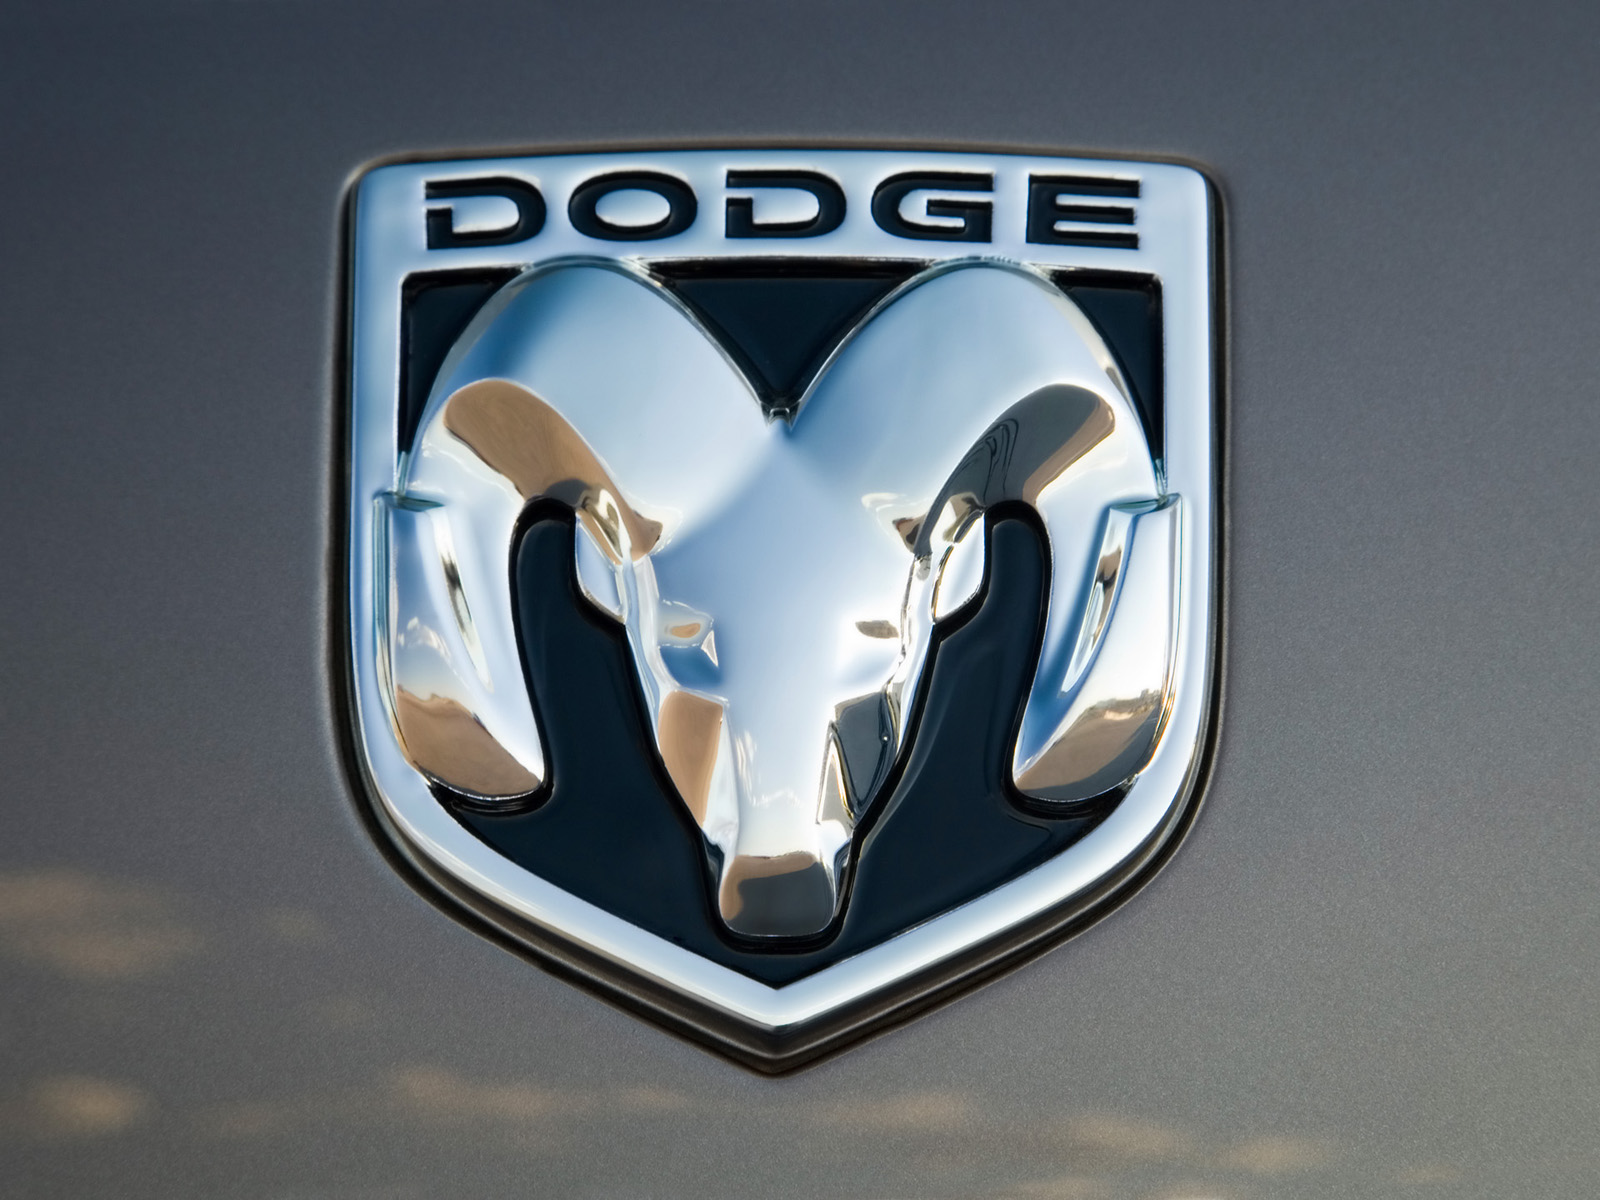 2009 Dodge Ram pickup truck logo wallpaper 1600x1200 113601 1600x1200